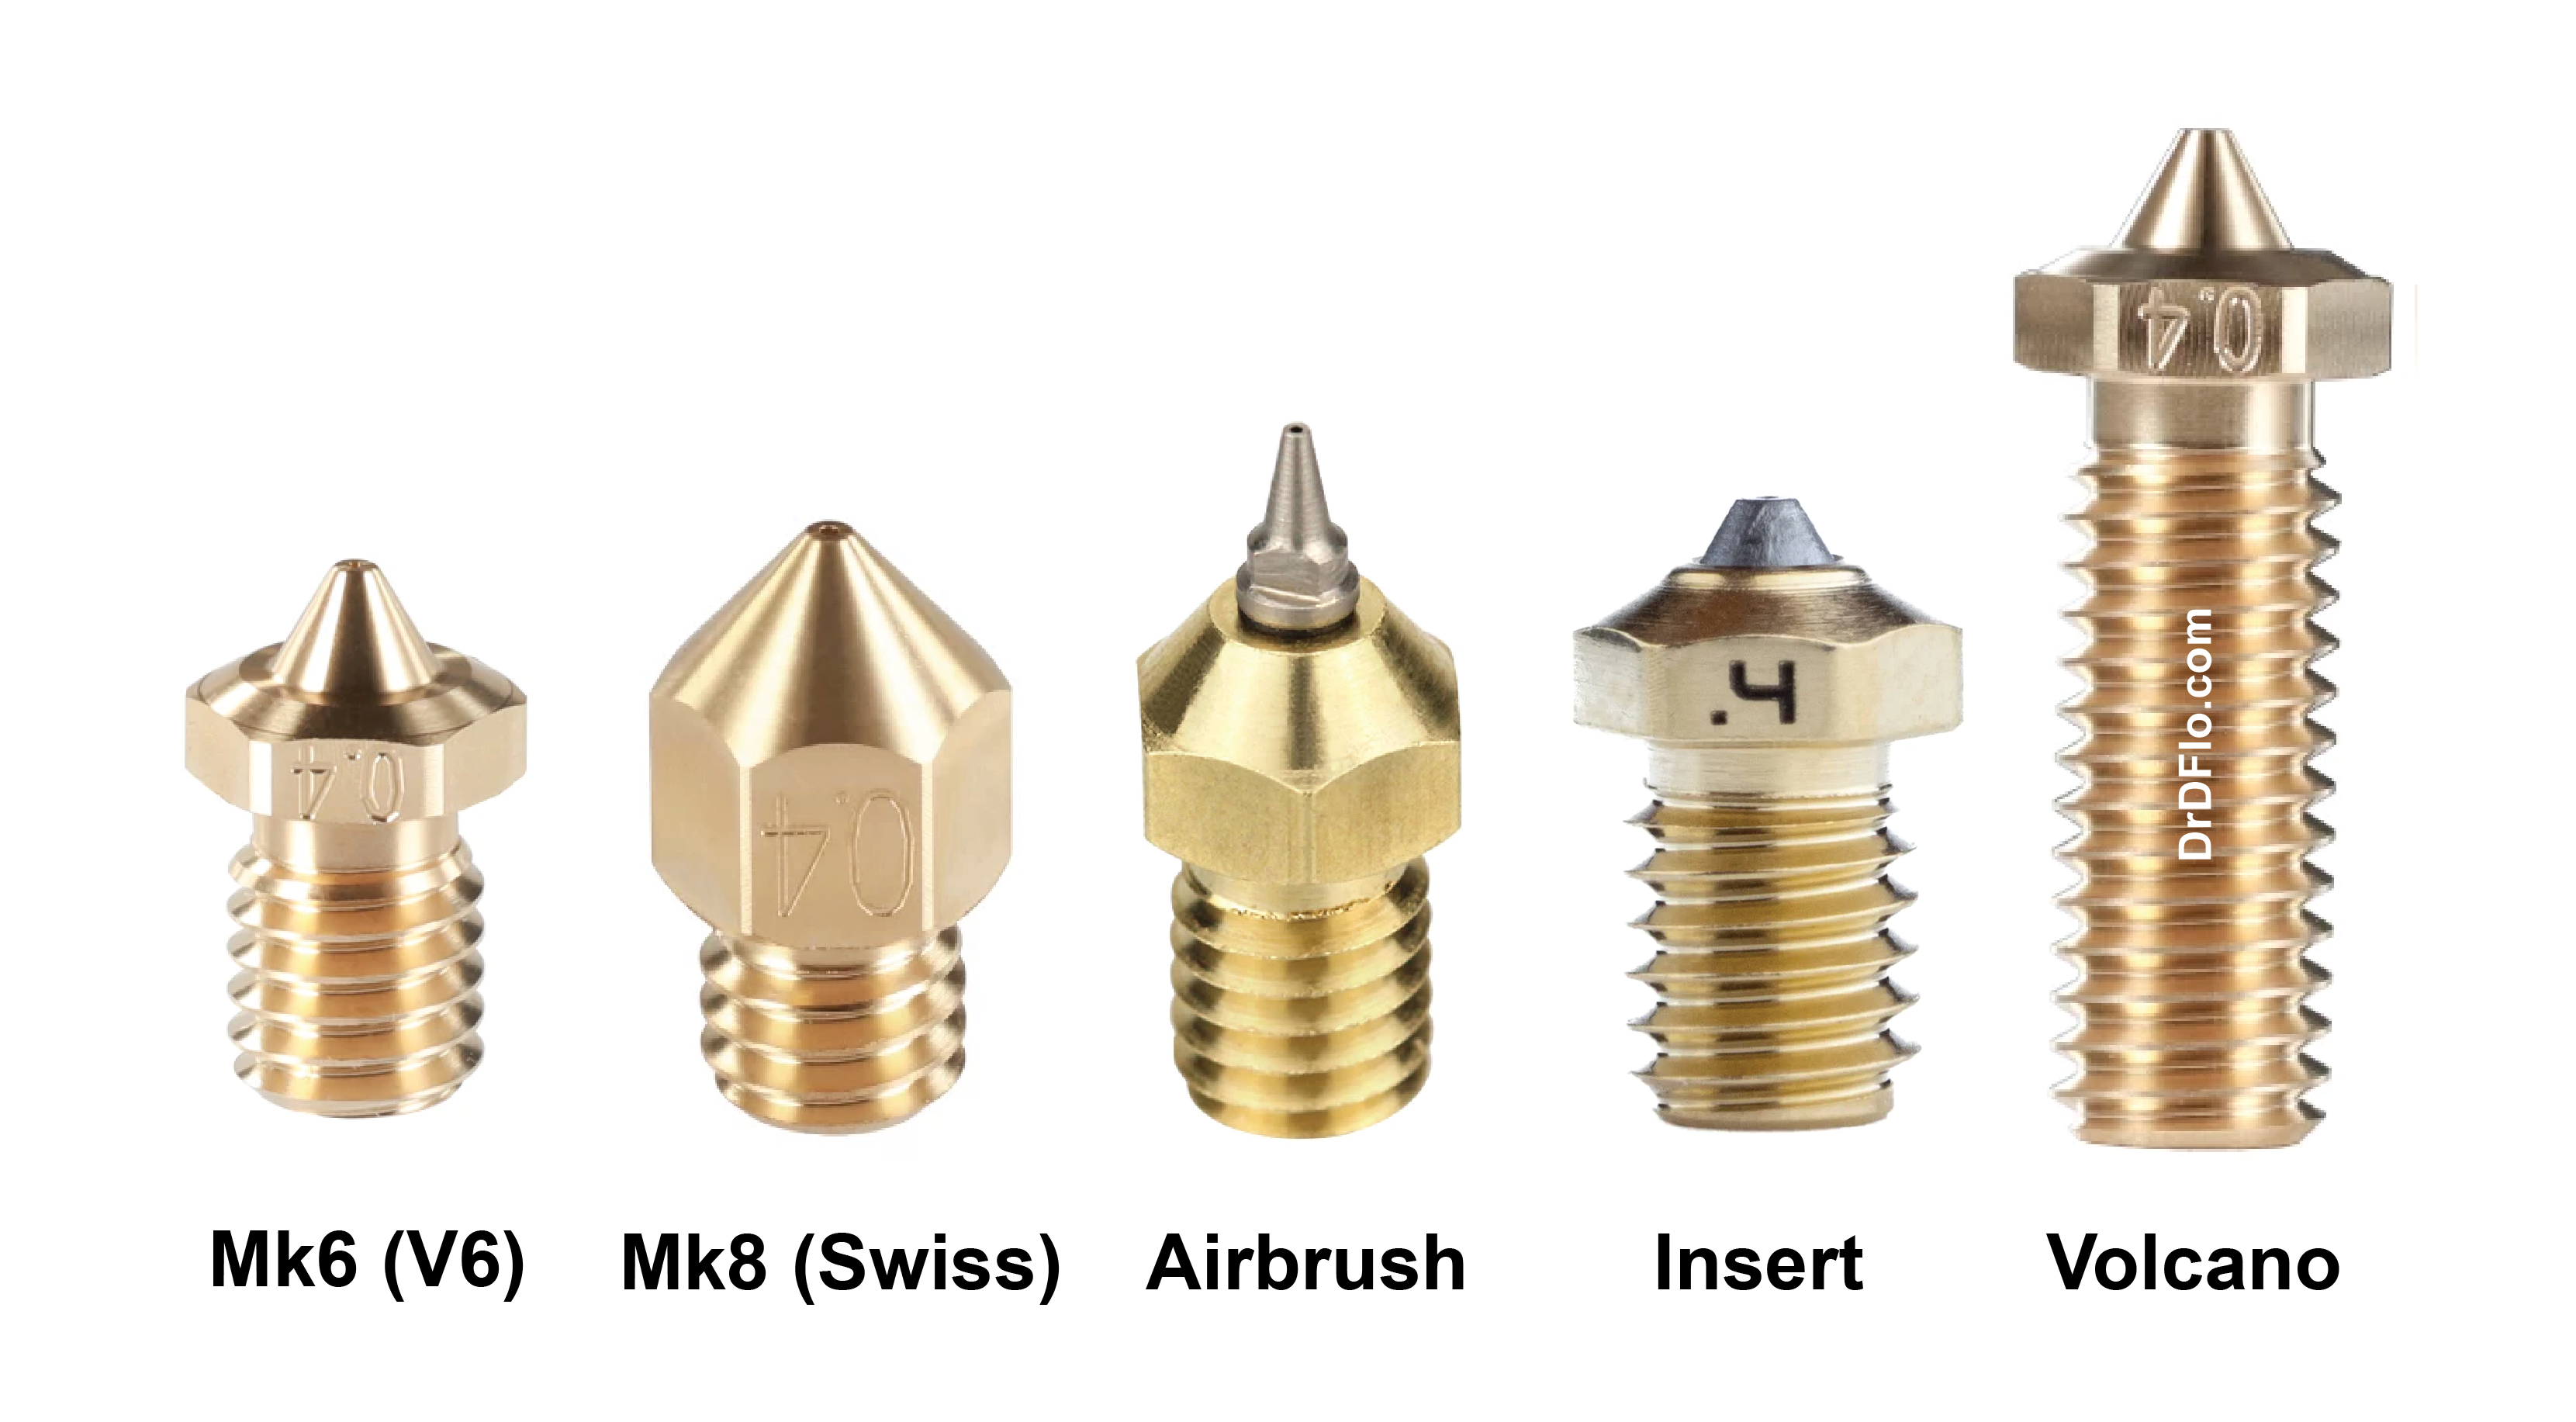 Different nozzle geometries, including Mk6, Mk8, Airbrush, Volcano